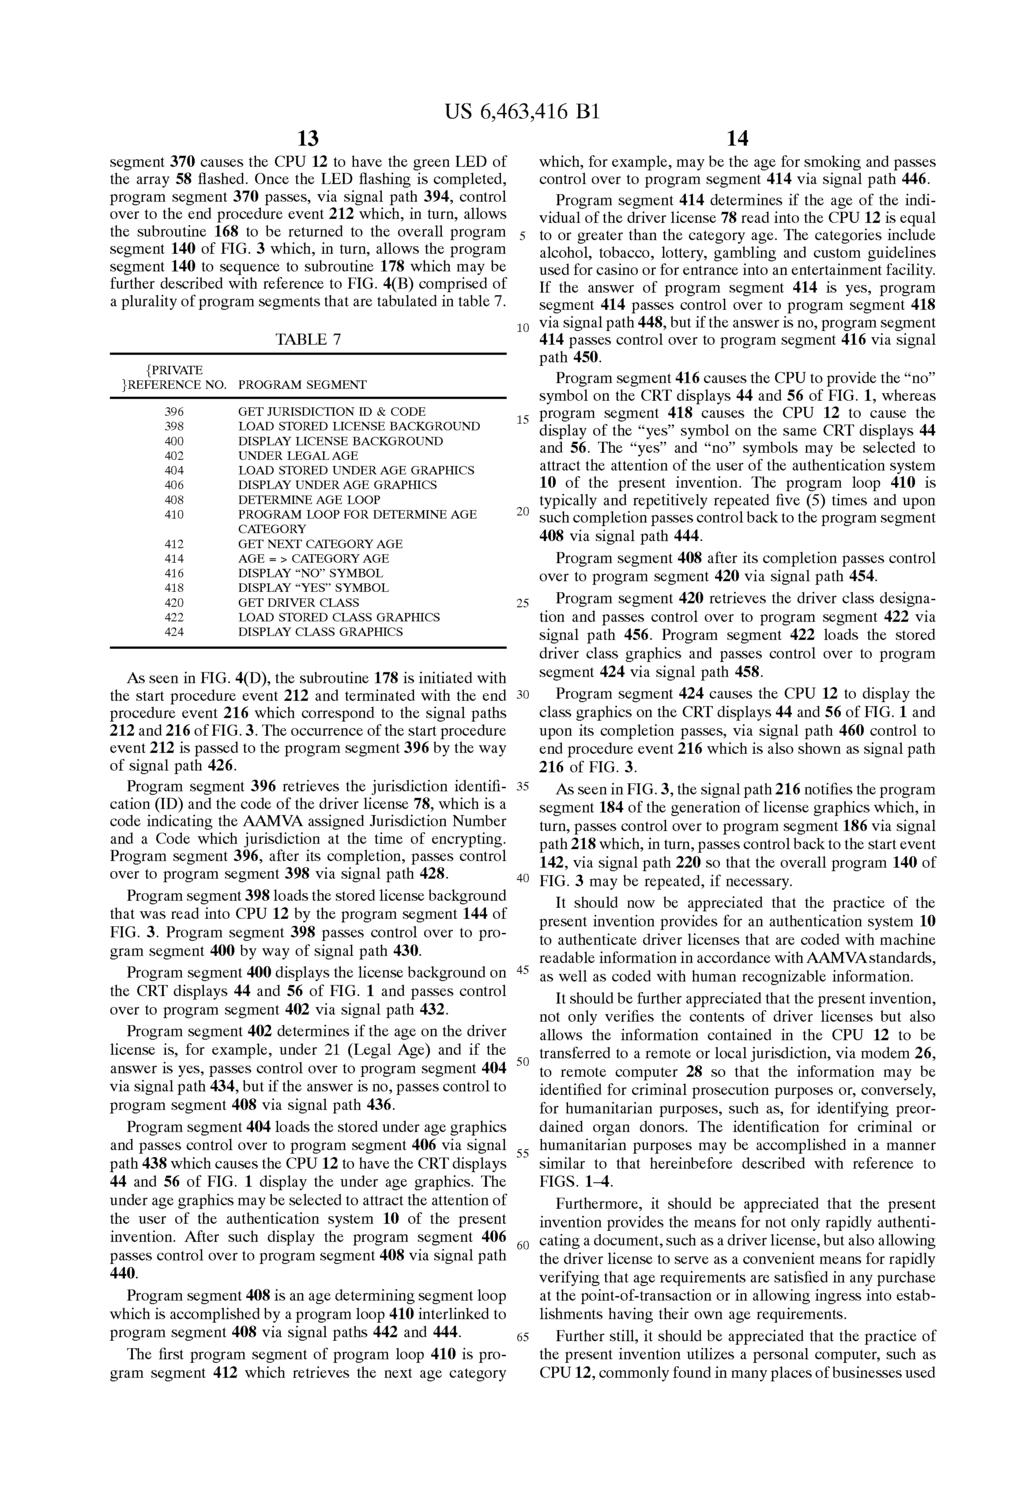 Case 2:15-cv-00366 Document